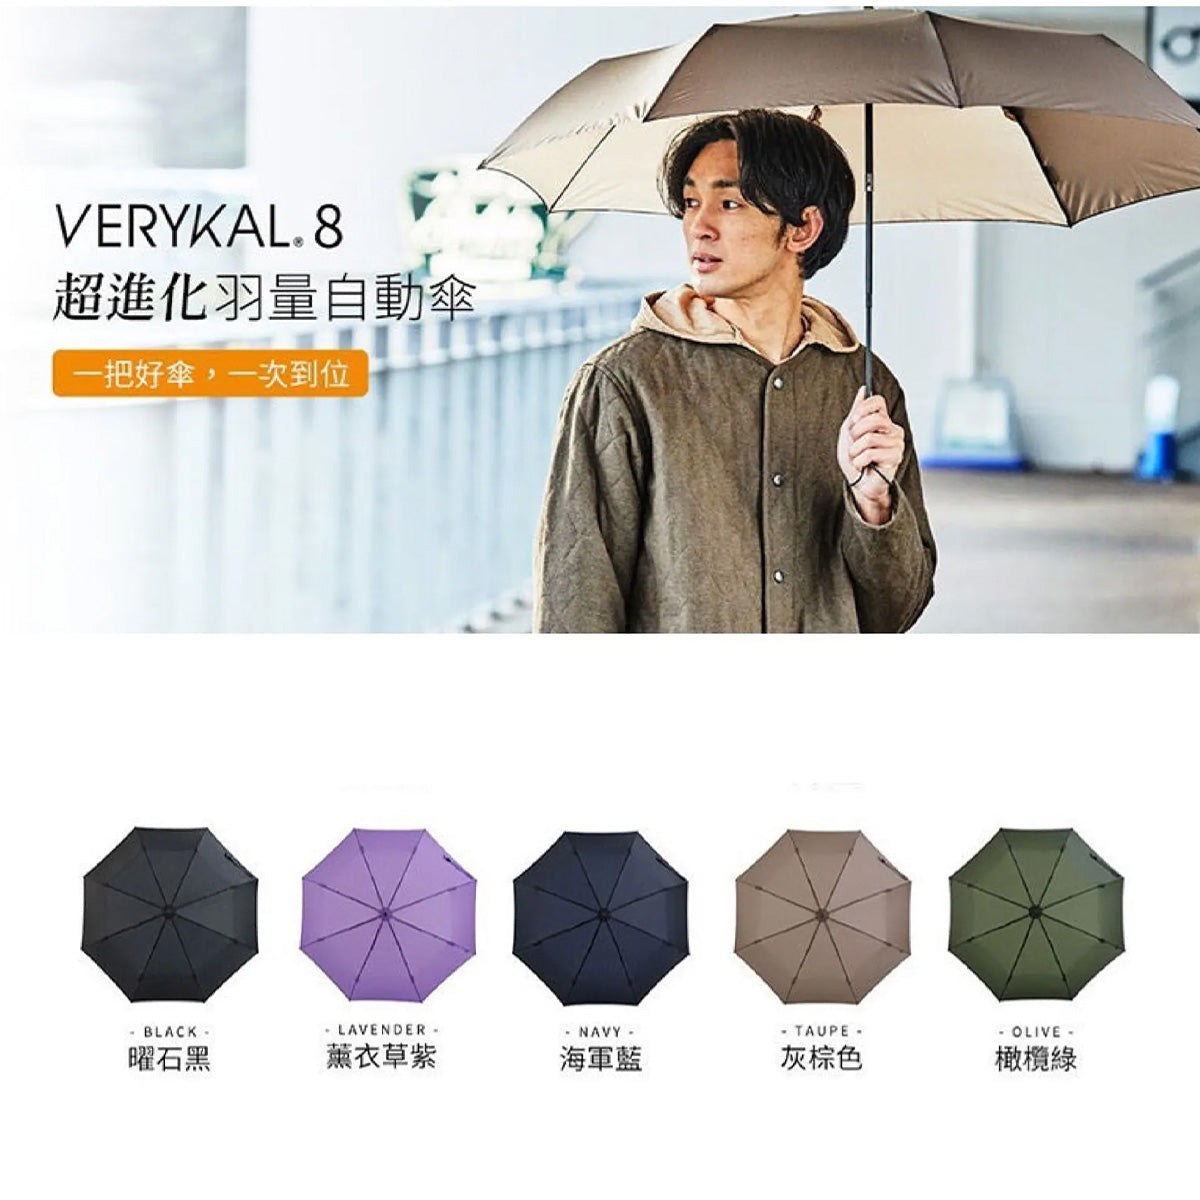 AMVEL Verykal 8 Automatic Umbrella